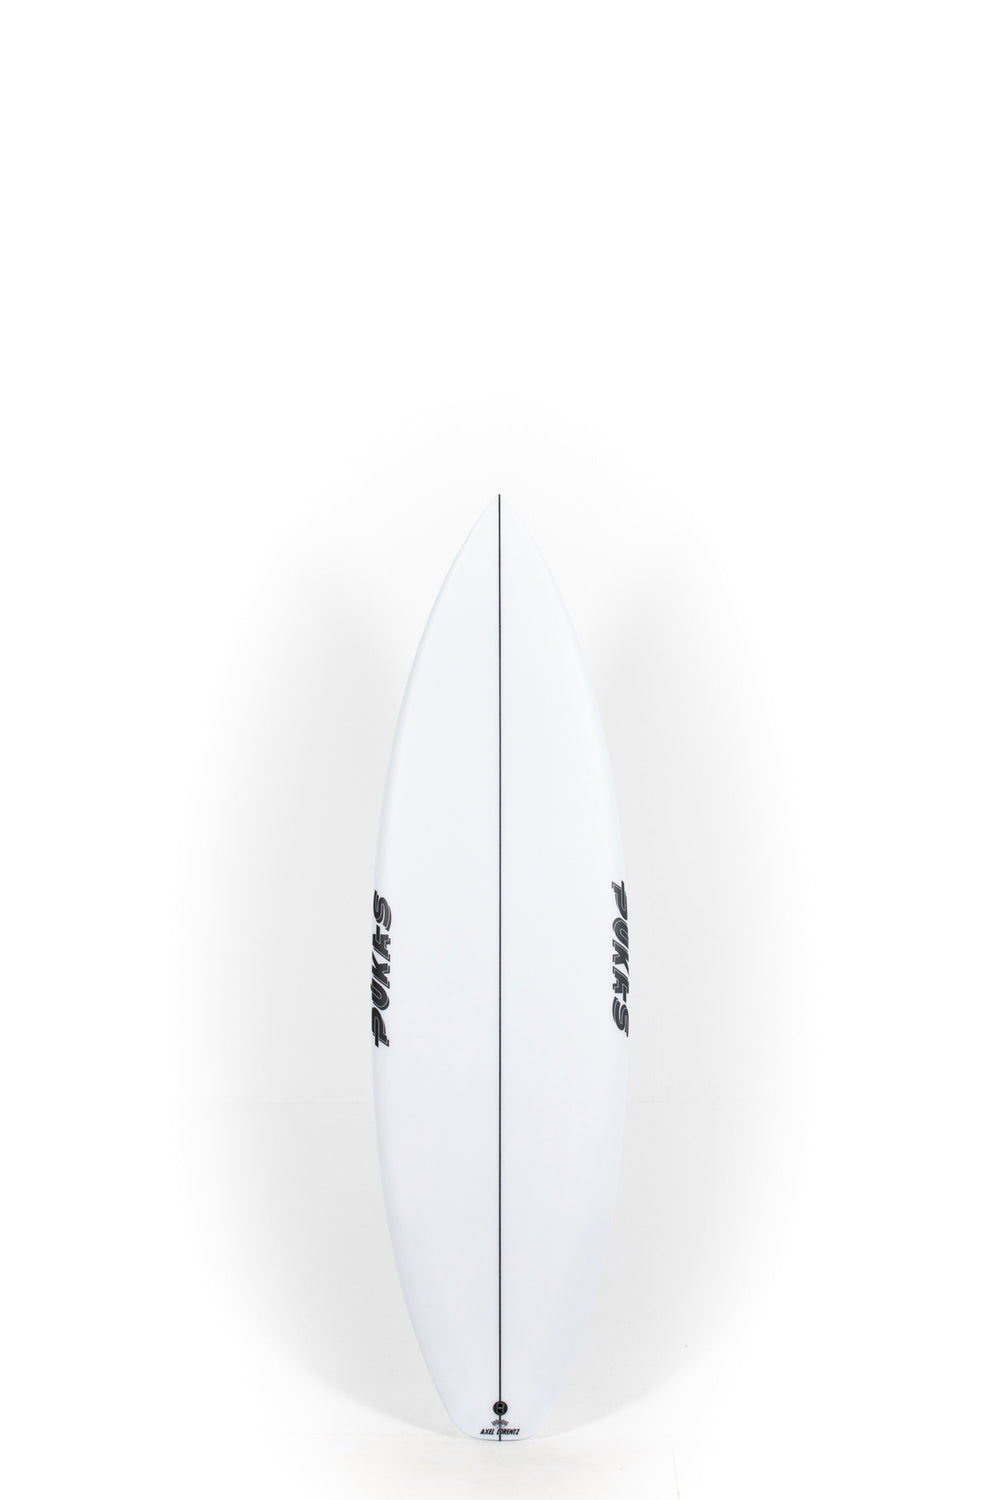 Pukas Surf Shop - Pukas Surfboard - TASTY TREAT ALL ROUND by Axel Lorentz - 5'10